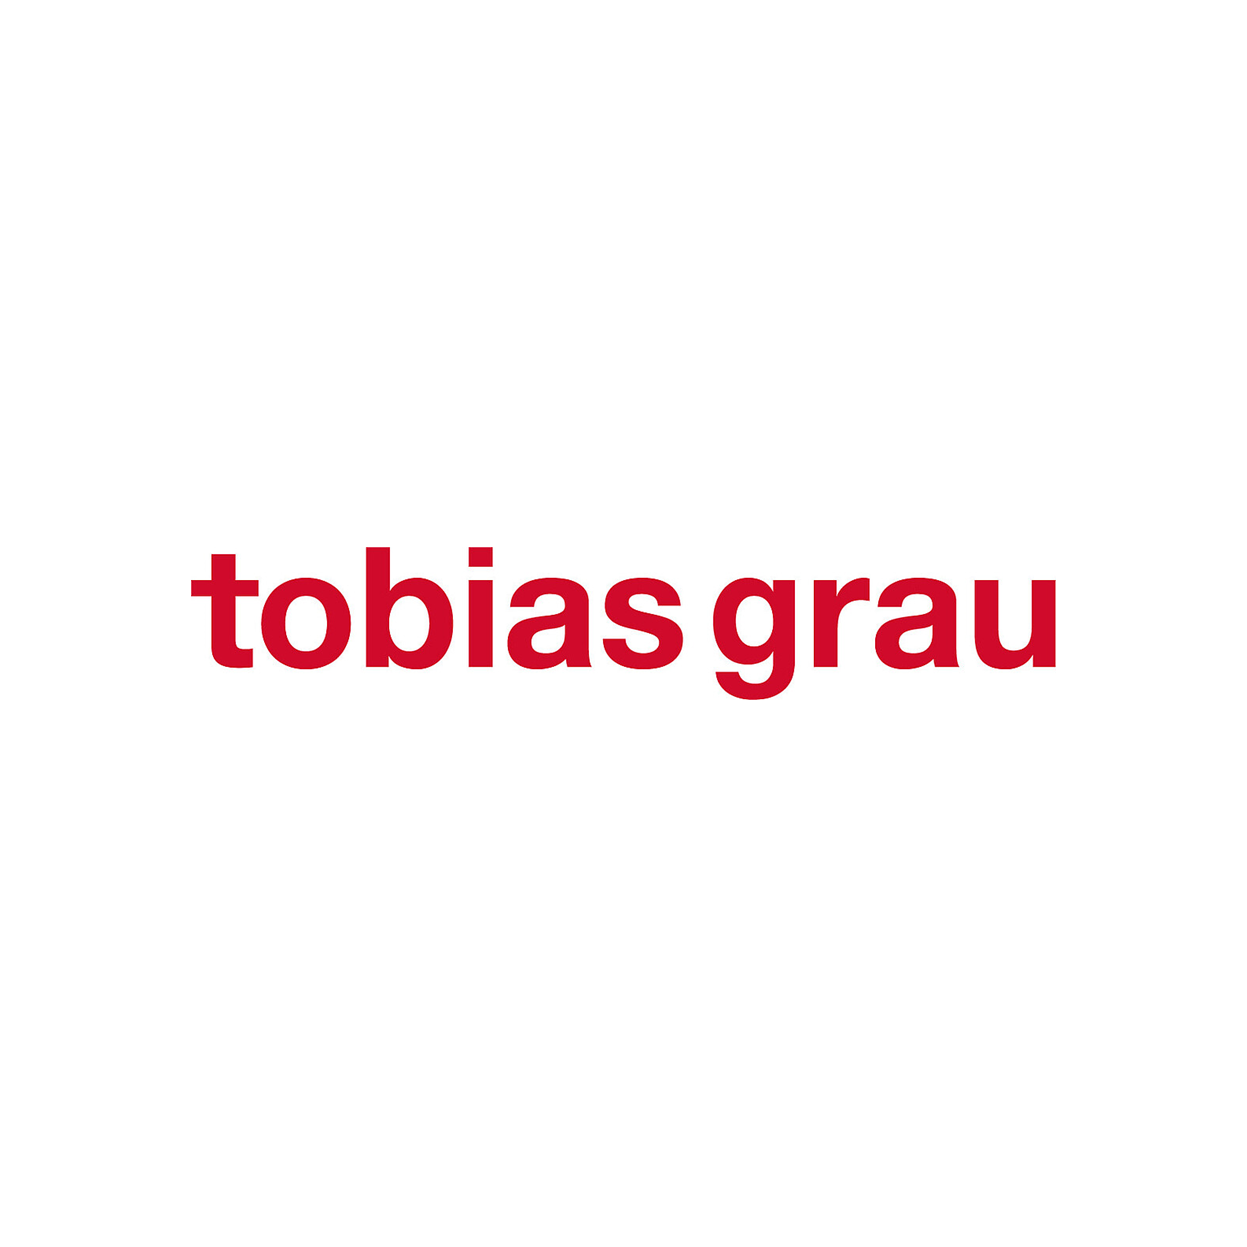 Tobias grau - Objekte Licht & Raum GmbH in Hamburg